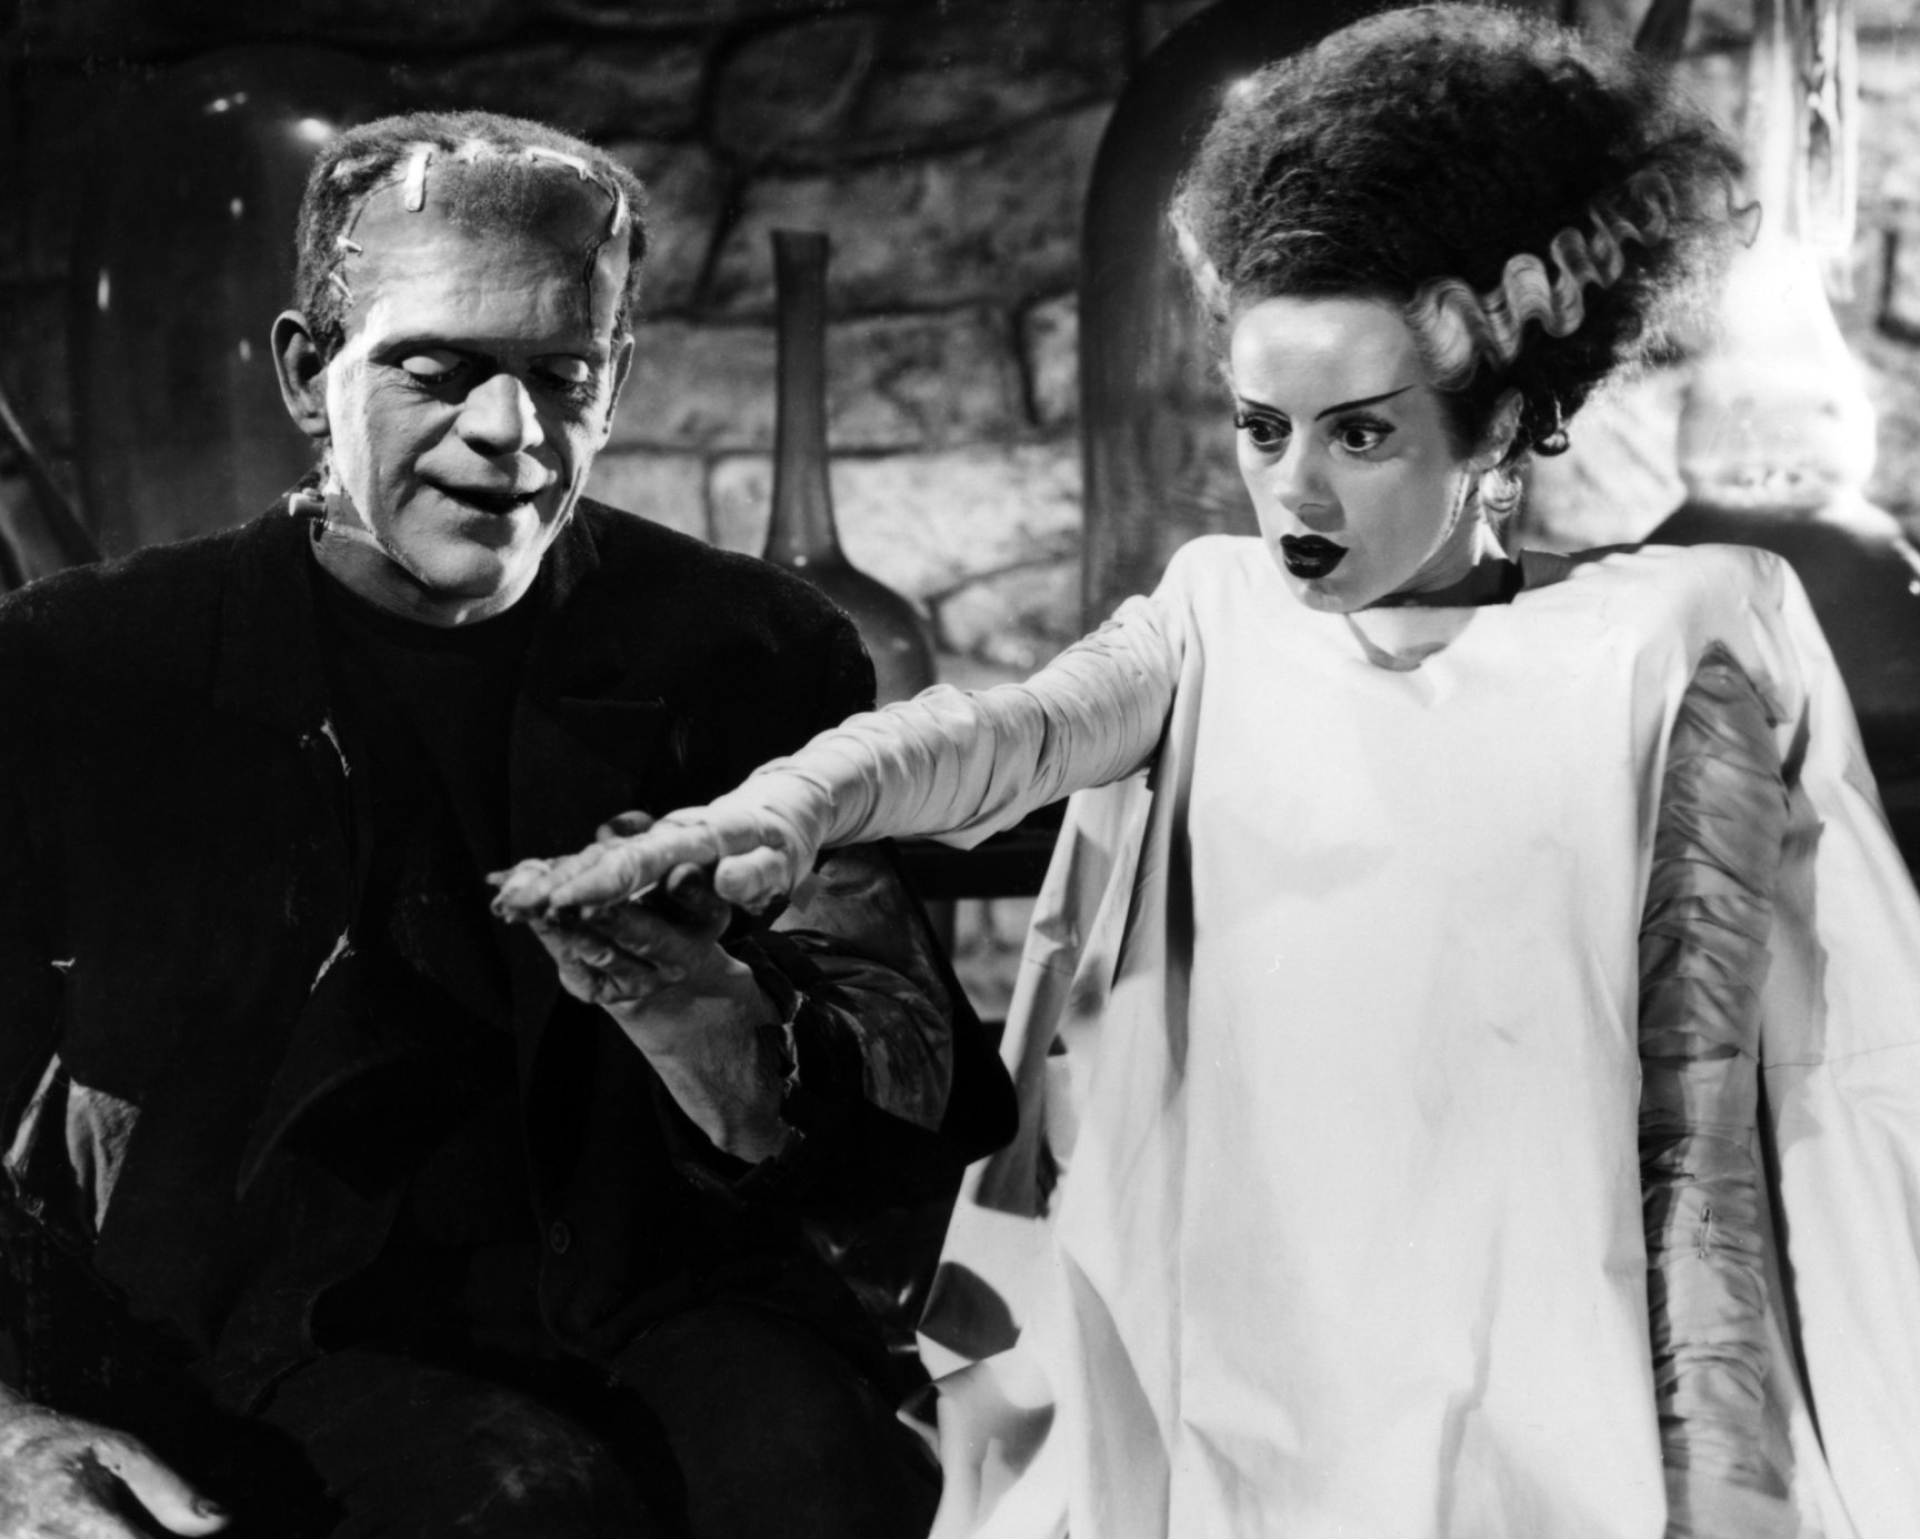 Bride of Frankenstein, HD wallpapers, Background images, 1920x1540 HD Desktop